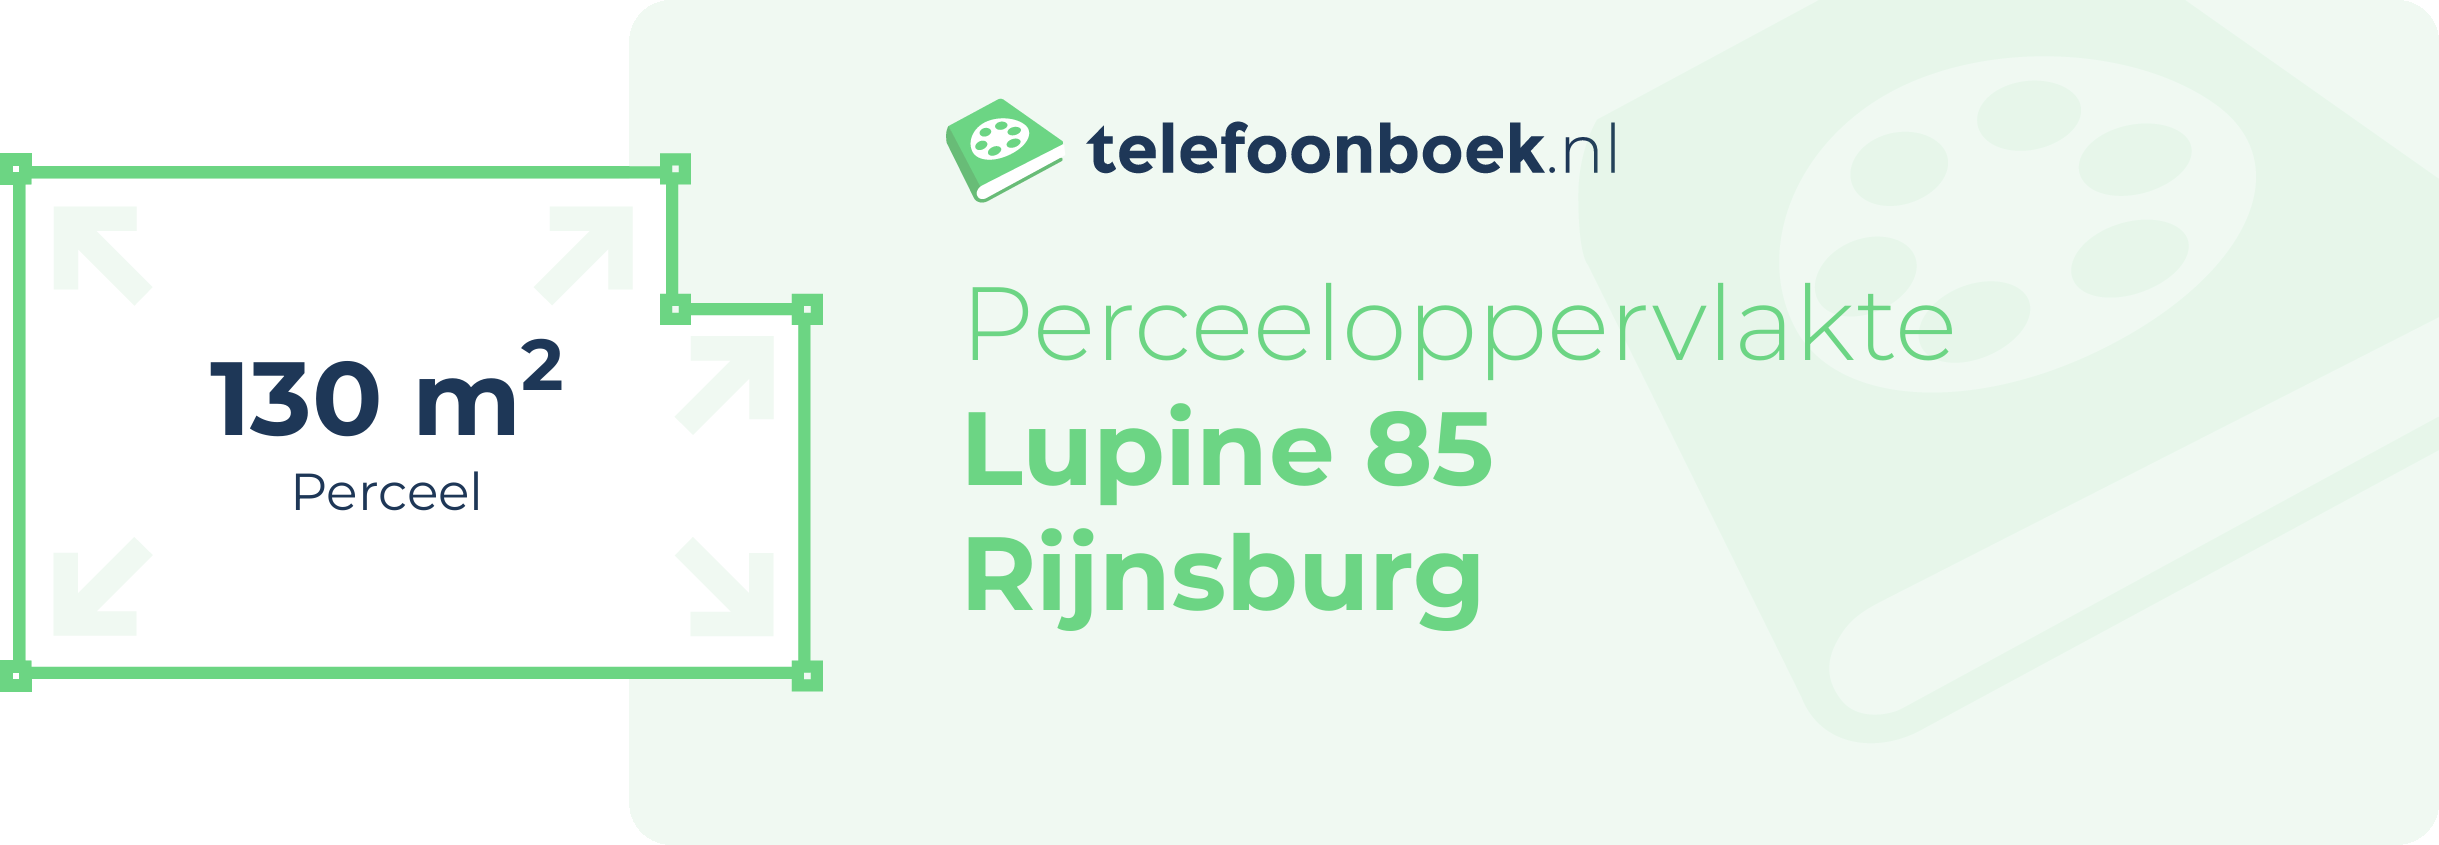 Perceeloppervlakte Lupine 85 Rijnsburg